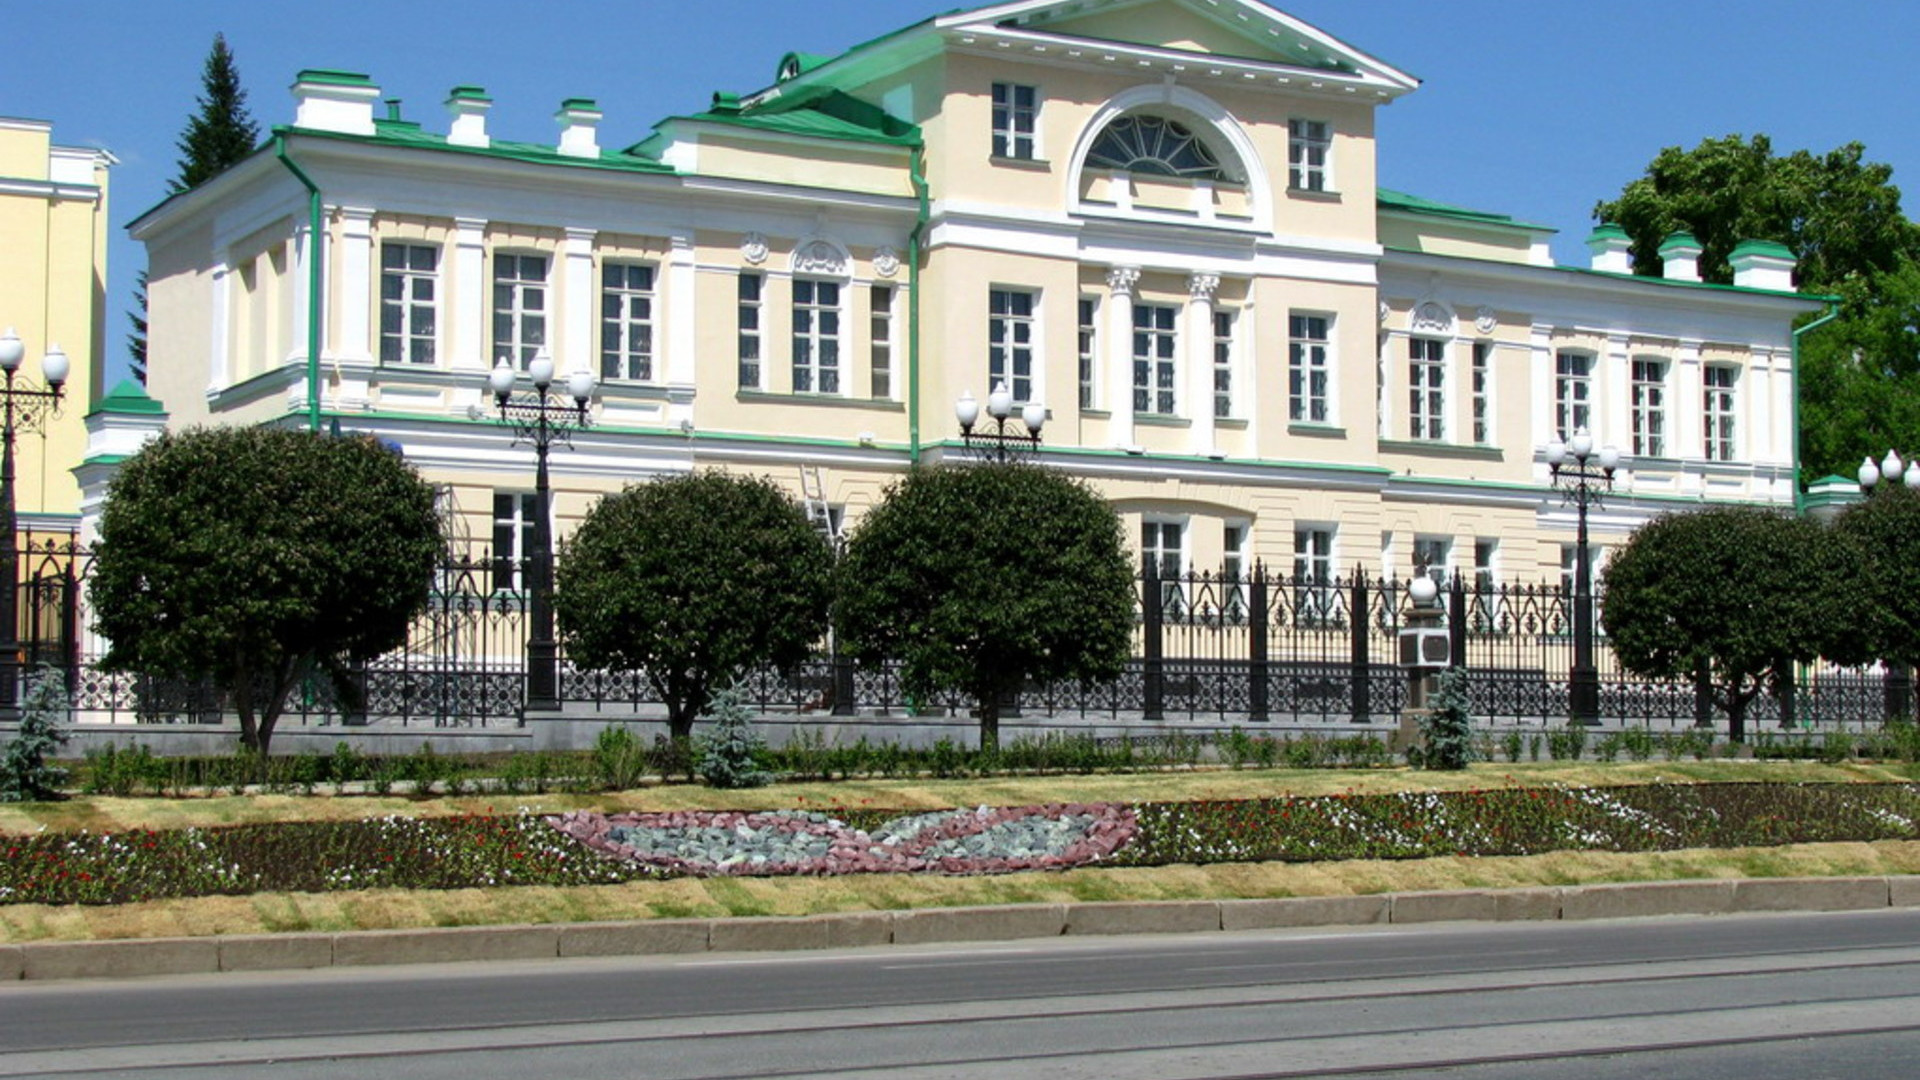 Театр музеи екатеринбурга